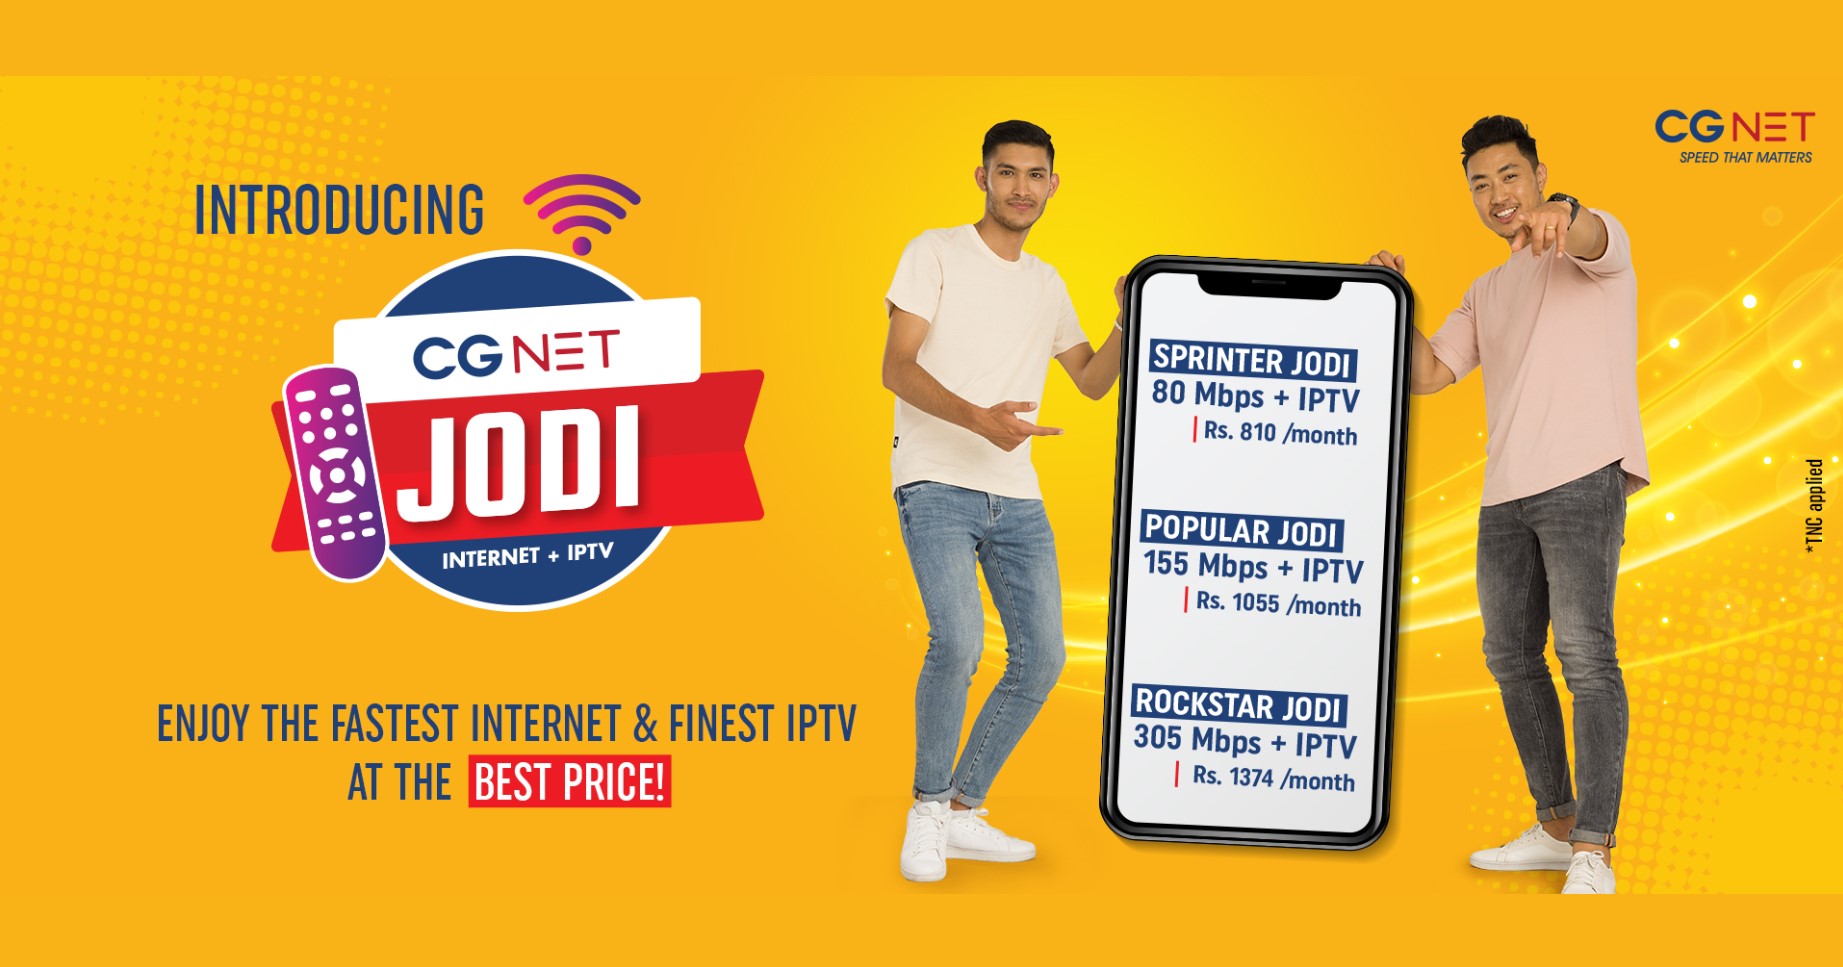 CG Net launches CGNET Jodi, its internet + IPTV service